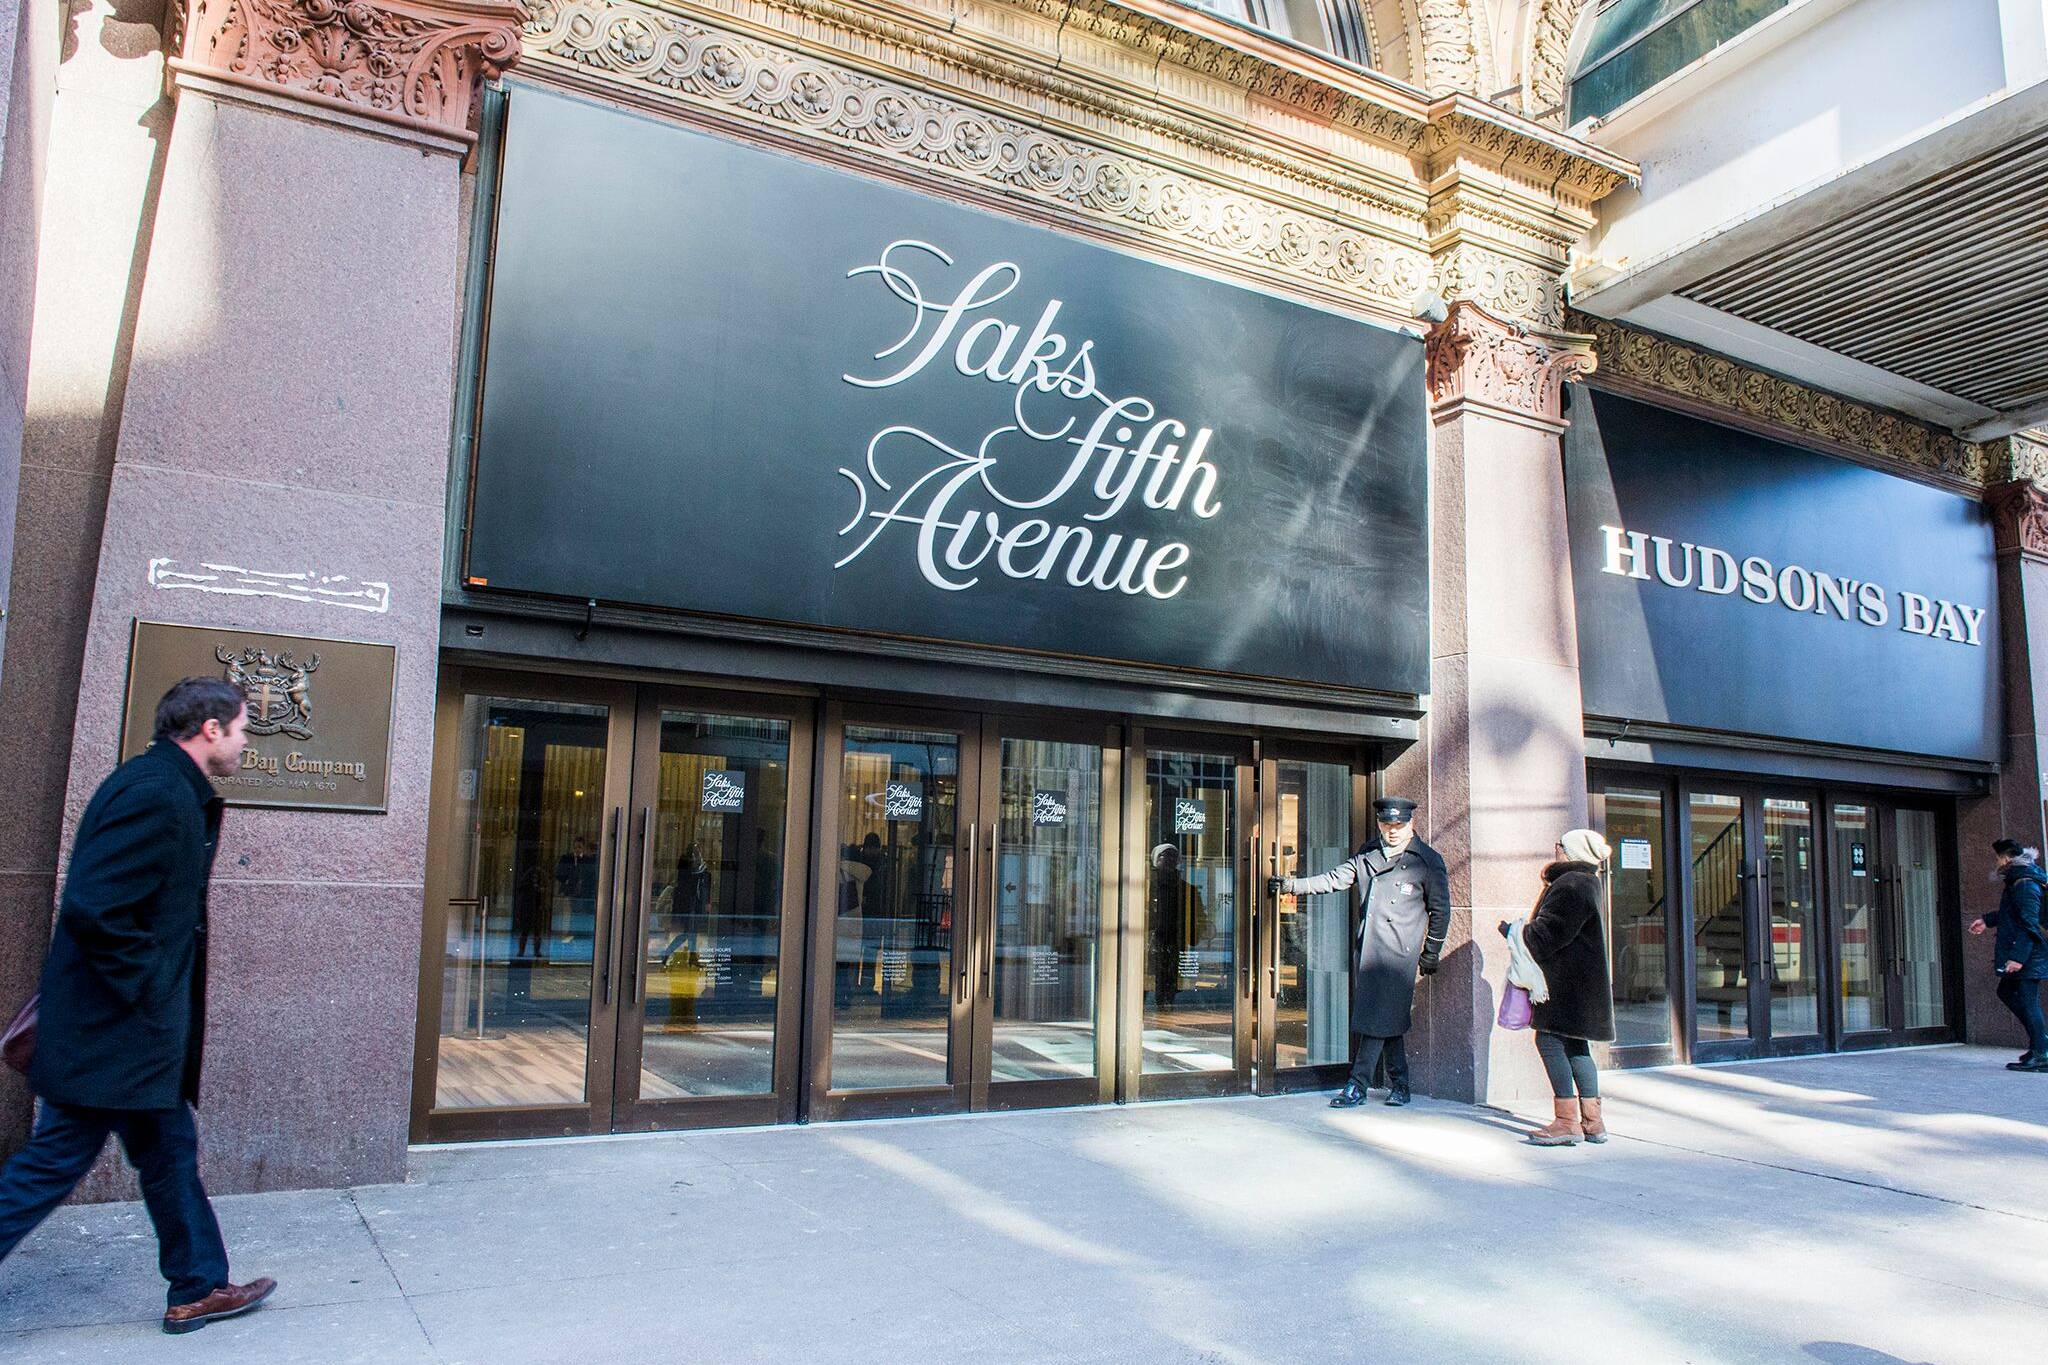 Saks Fifth Avenue by FRCH Design Worldwide & Saks Fifth Avenue team,  Toronto – Canada